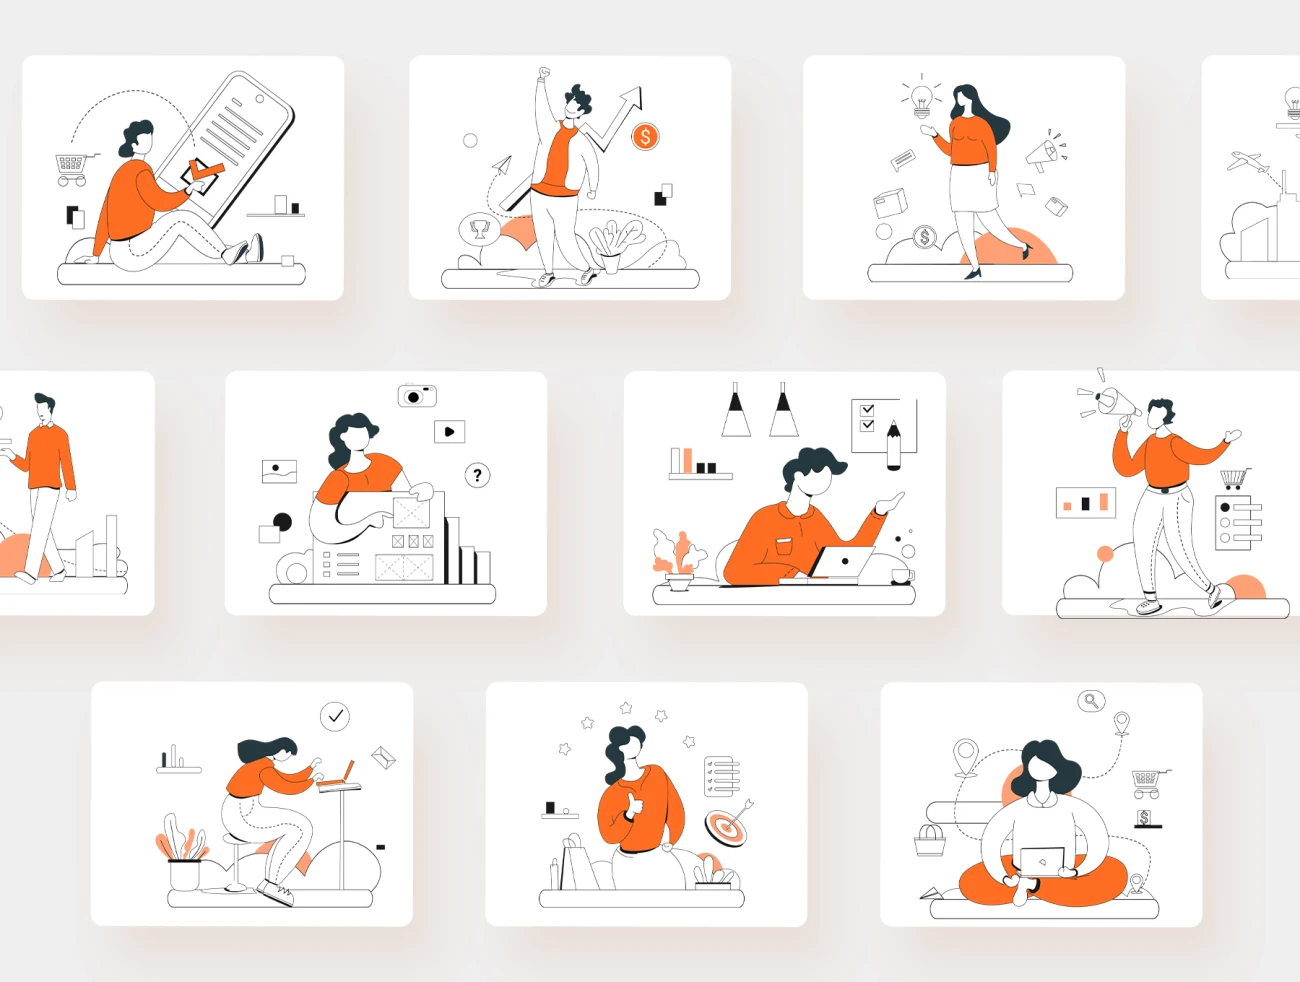 Marketting Illustration Kit 10款市场营销矢量营销插图套件-人物插画、商业金融、场景插画、学习生活、插画、插画功能、插画风格、社交购物、线条手绘、职场办公、趣味漫画、运动健身、金融理财-到位啦UI